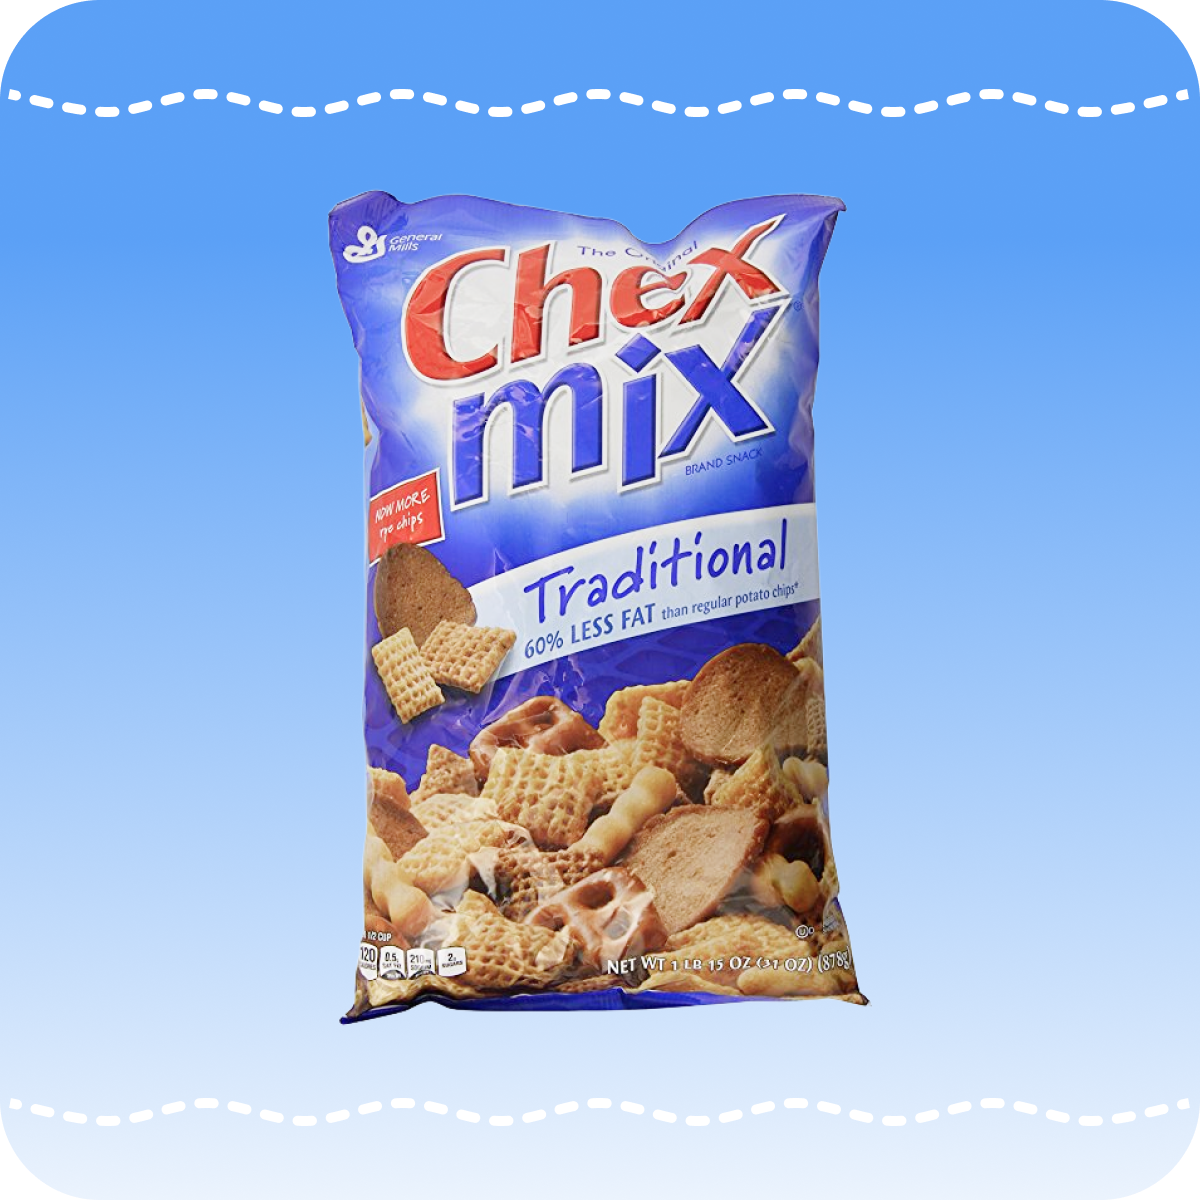 nuro top office snacks chex mix